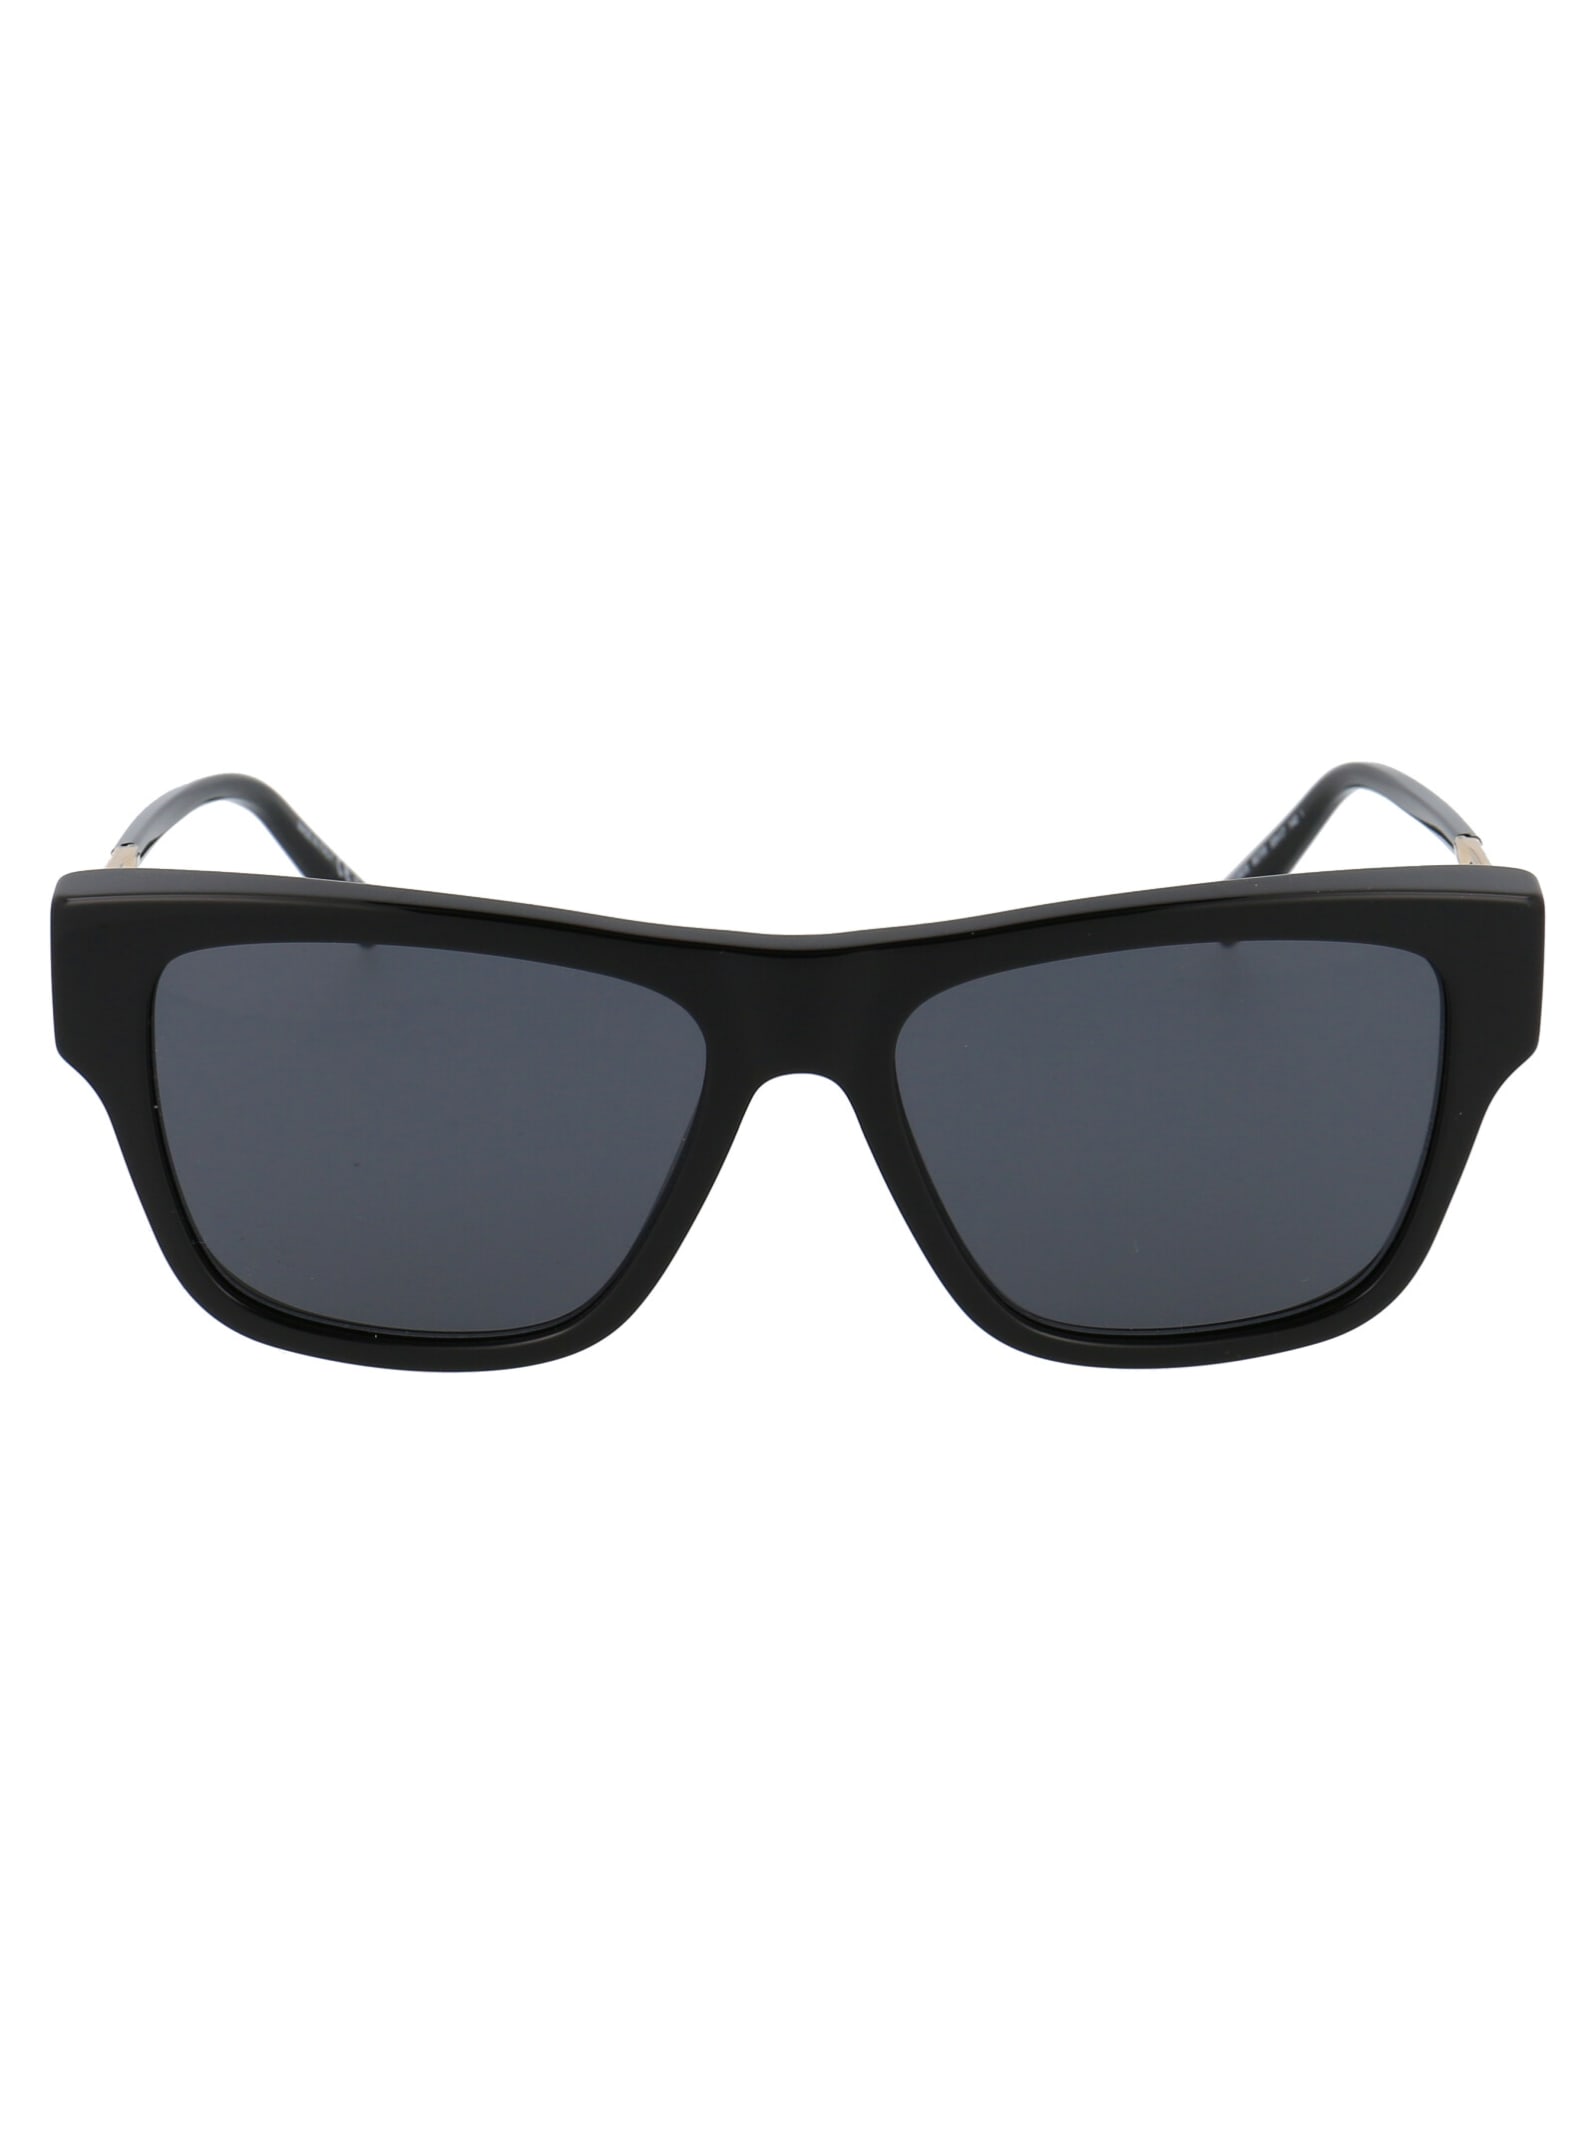 Gv 7190/s Sunglasses